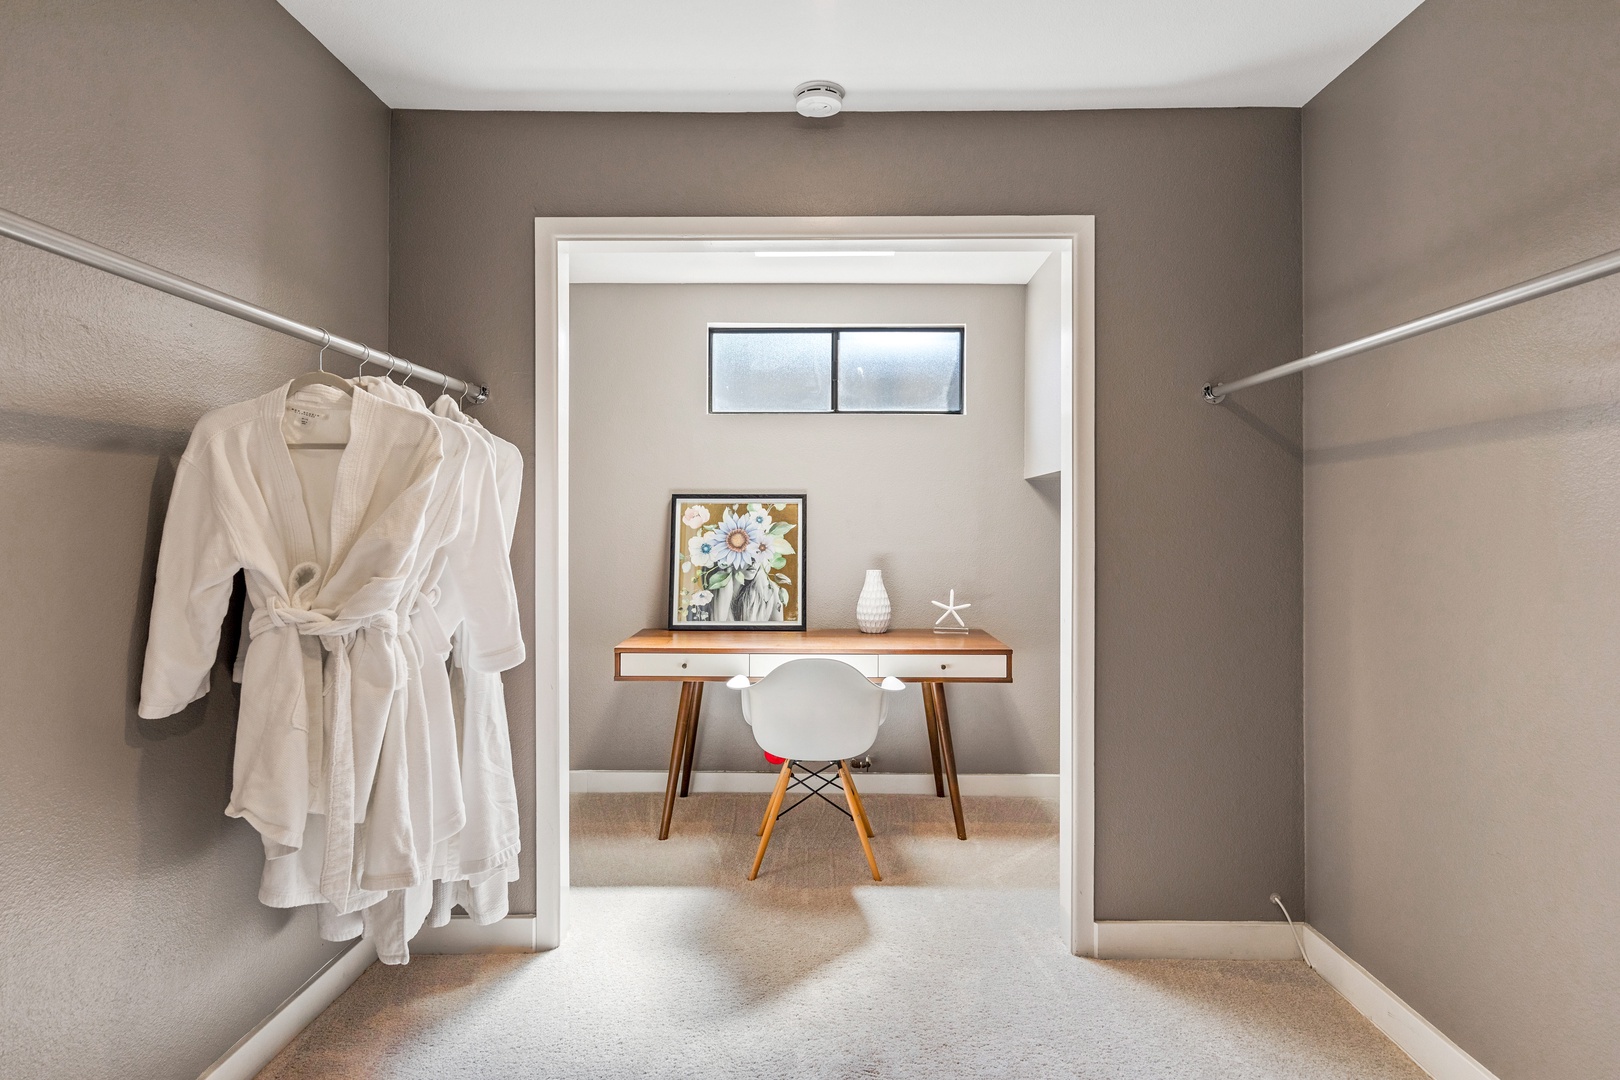 En-suite to bedroom #1 with vanity space